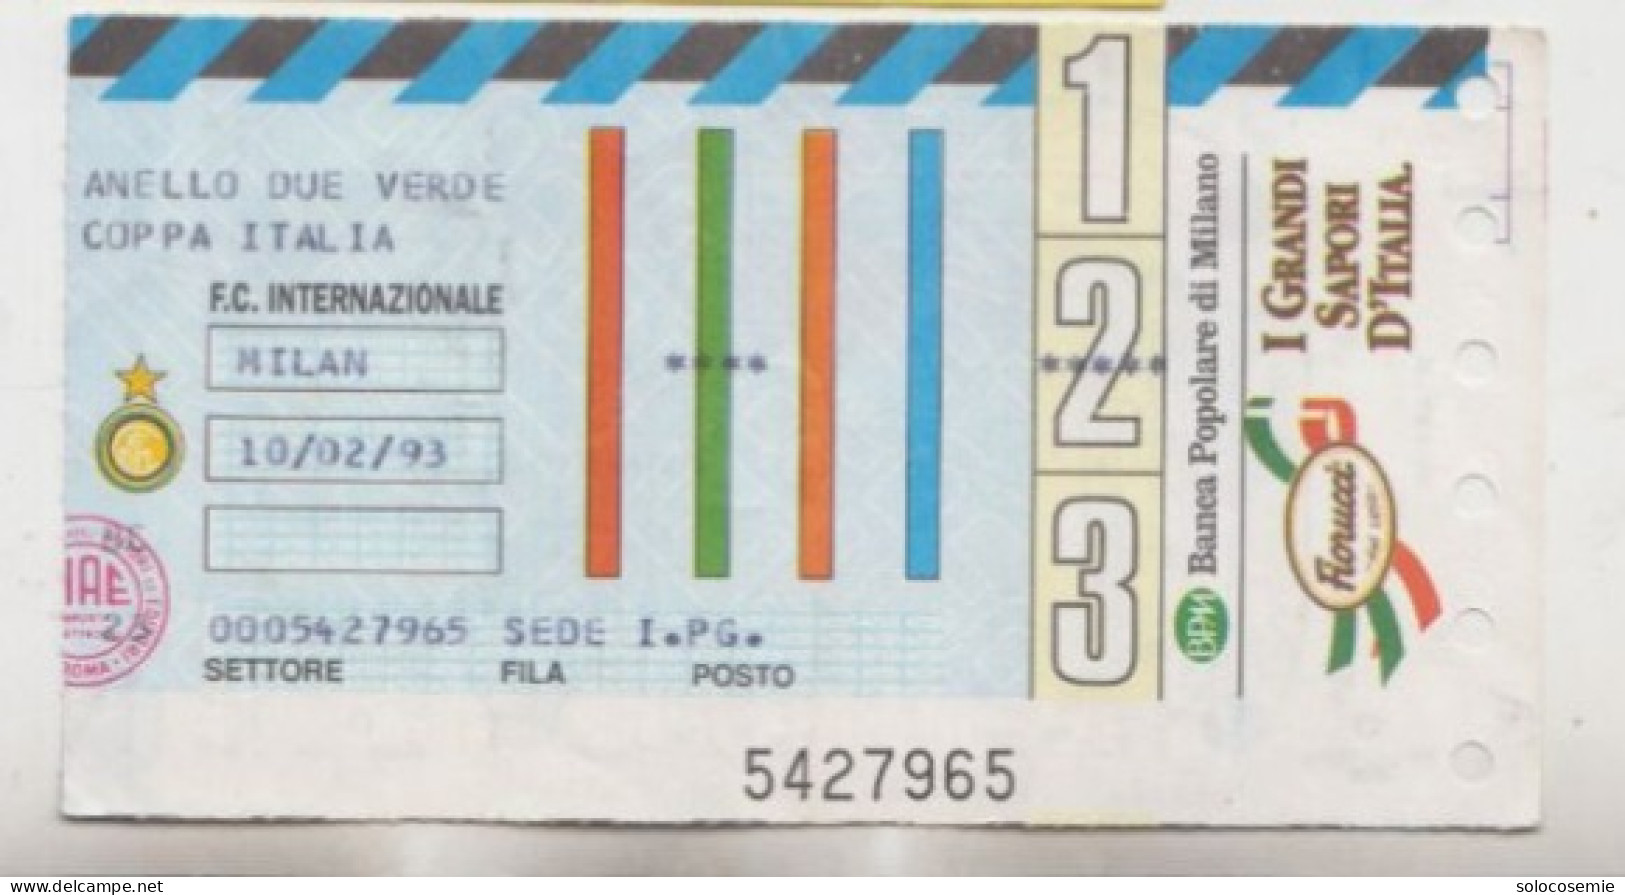 10/02/1993 INTER -MILAN  # COPPA ITALIA - Calcio  #  Ingresso  Stadio / Ticket  5427965 - Eintrittskarten